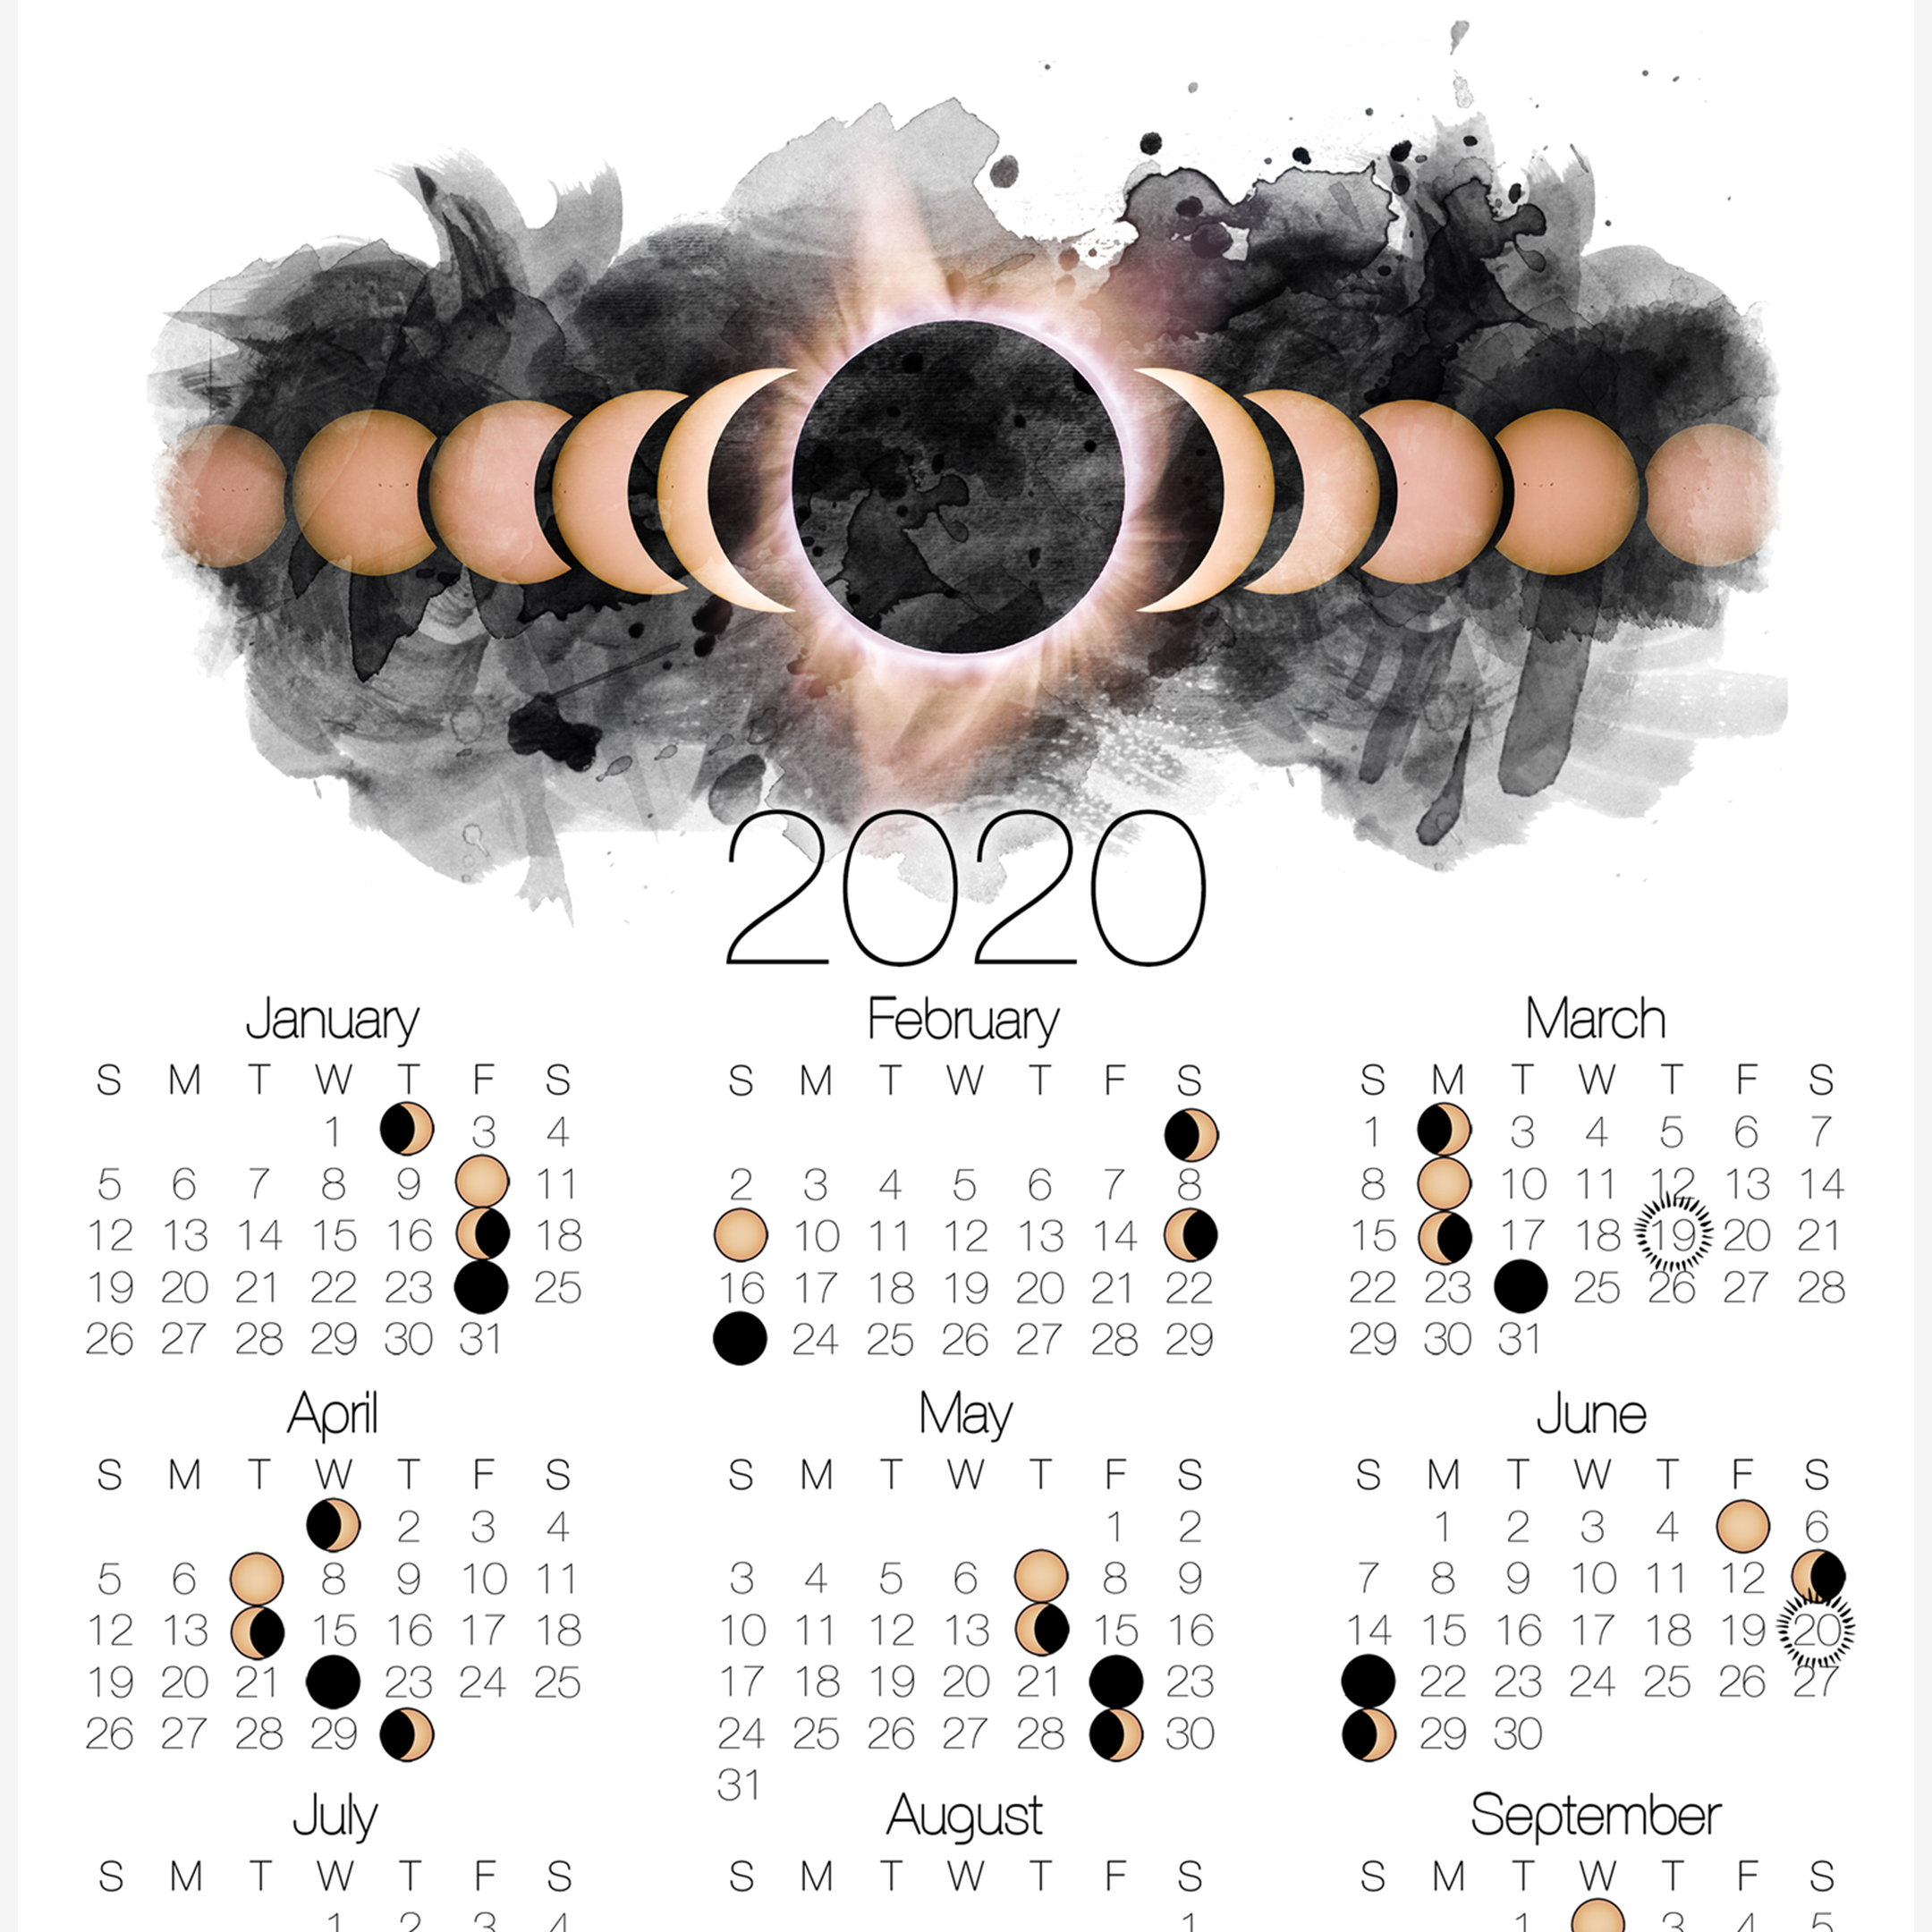 2020 Moon Phase Calendar - Lunar Calendar With Solar Eclipse